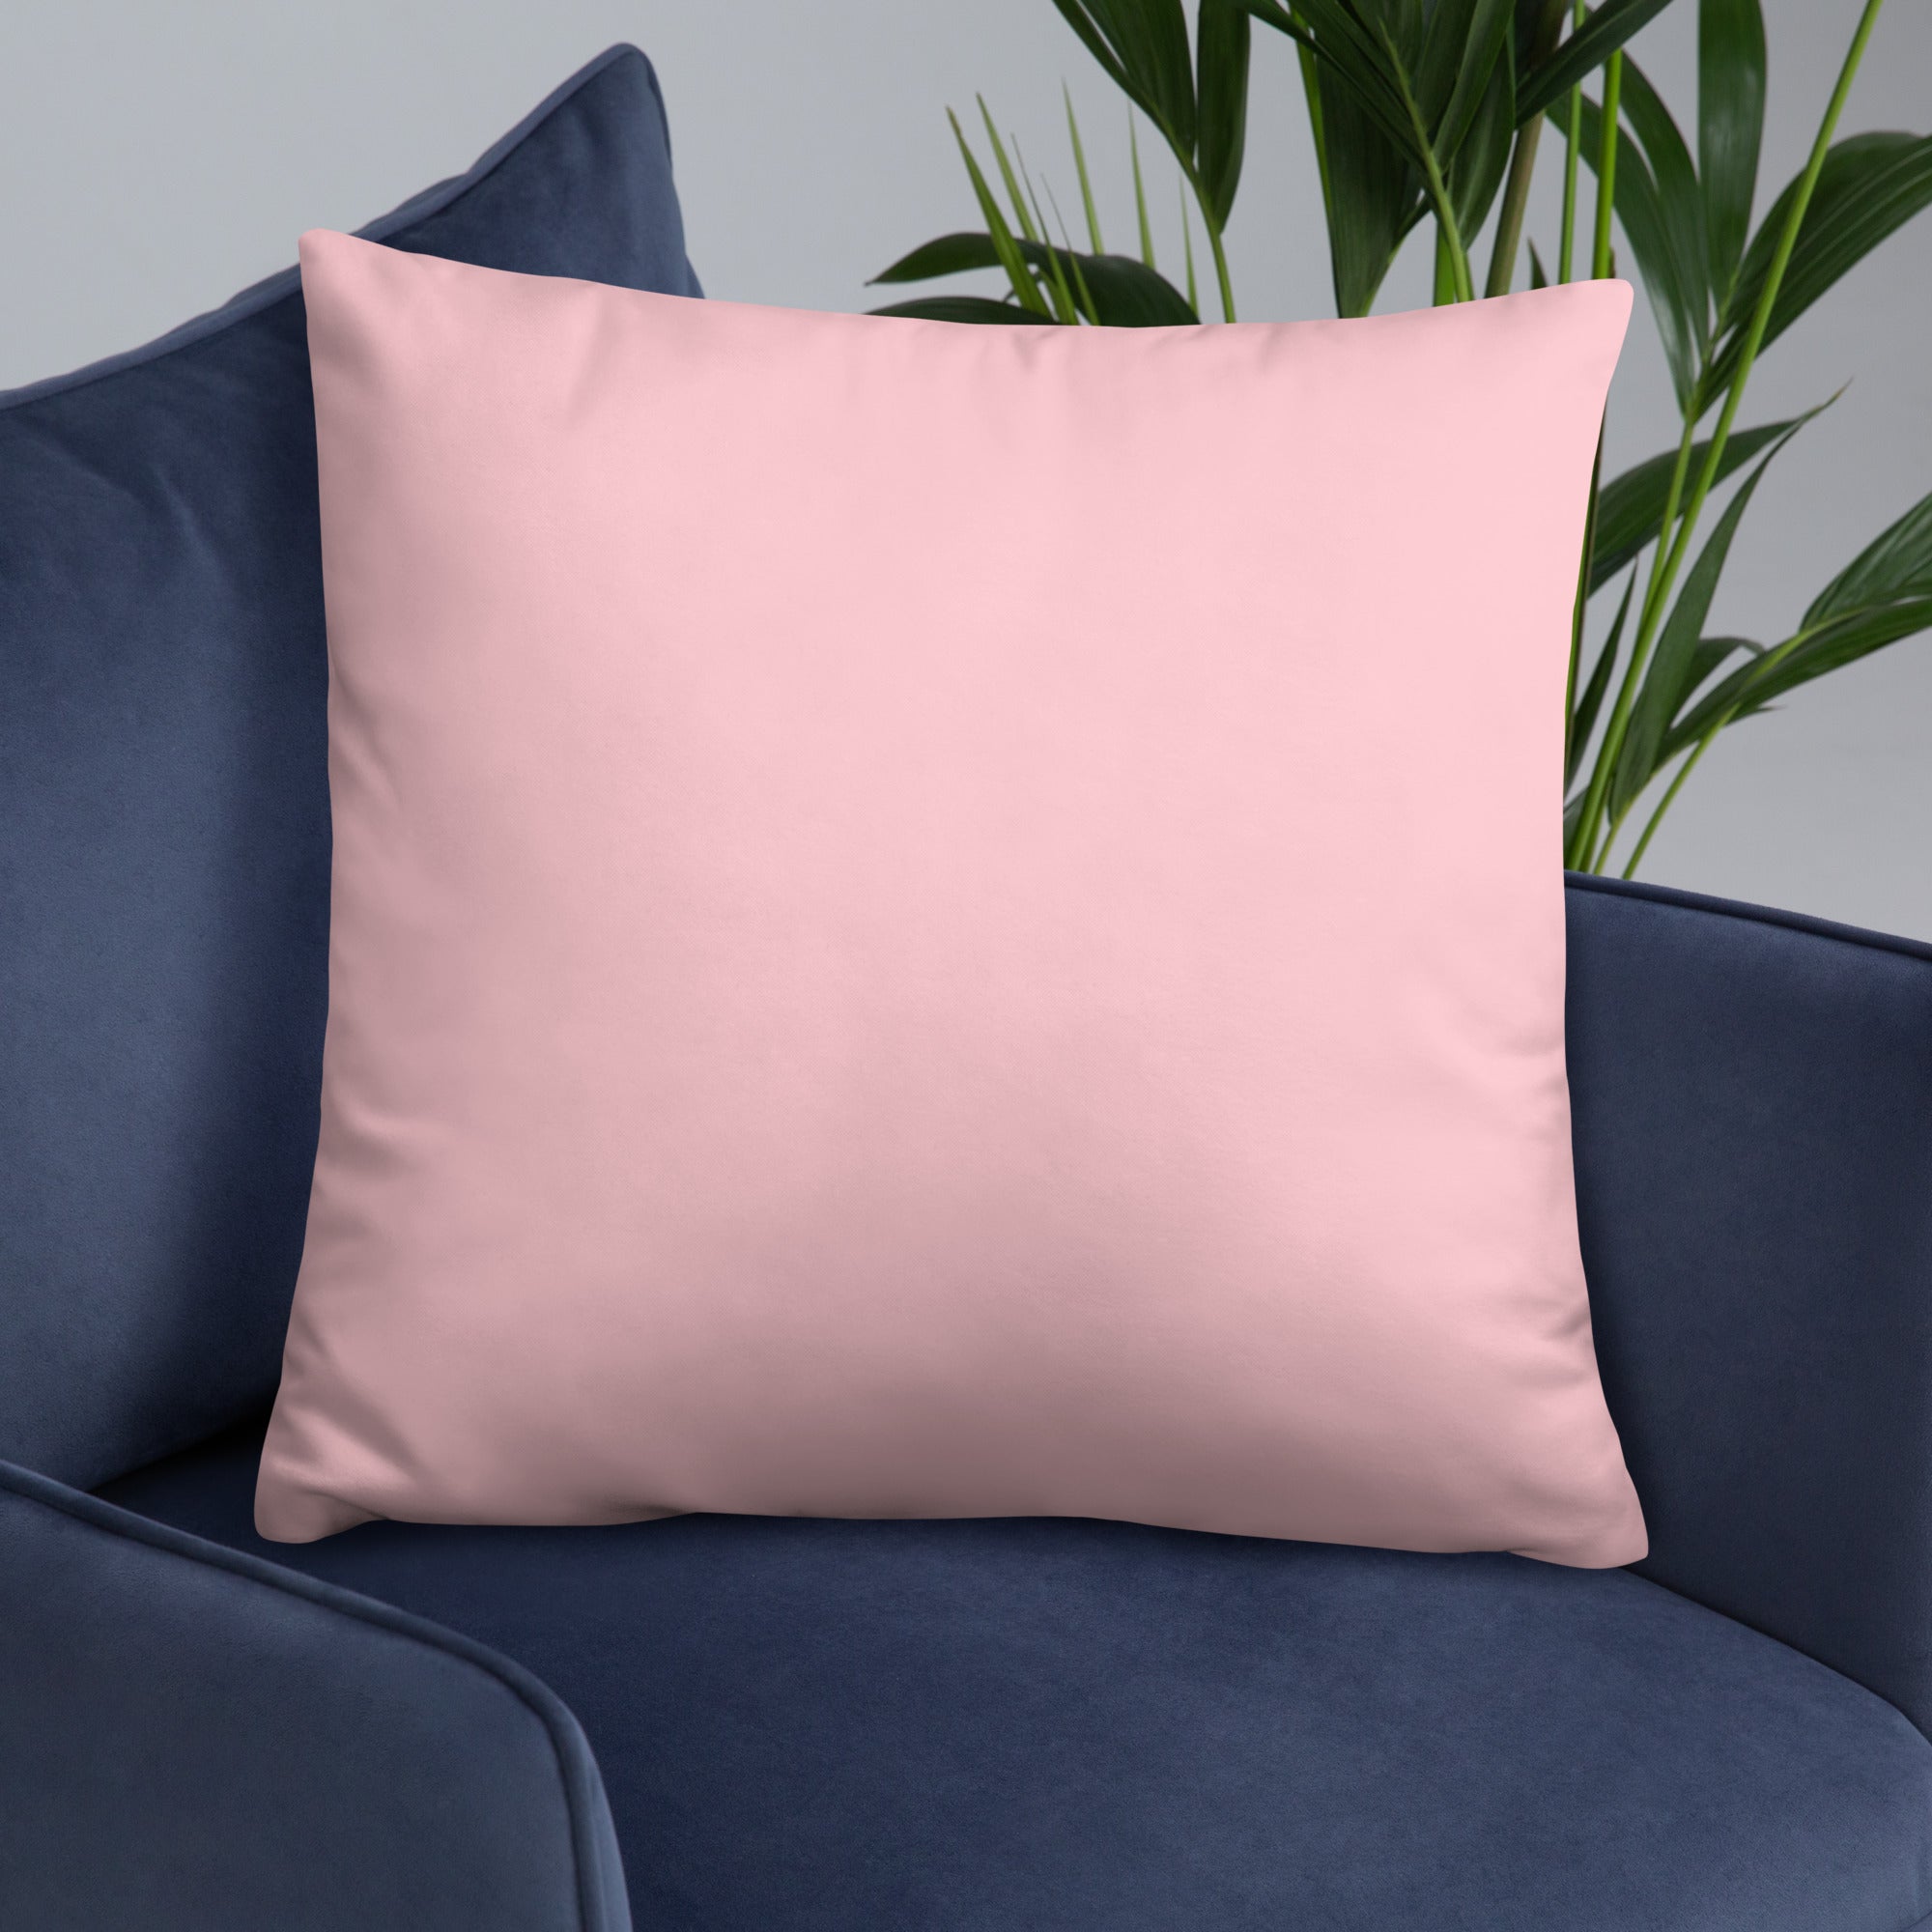 Pink & White Pillow